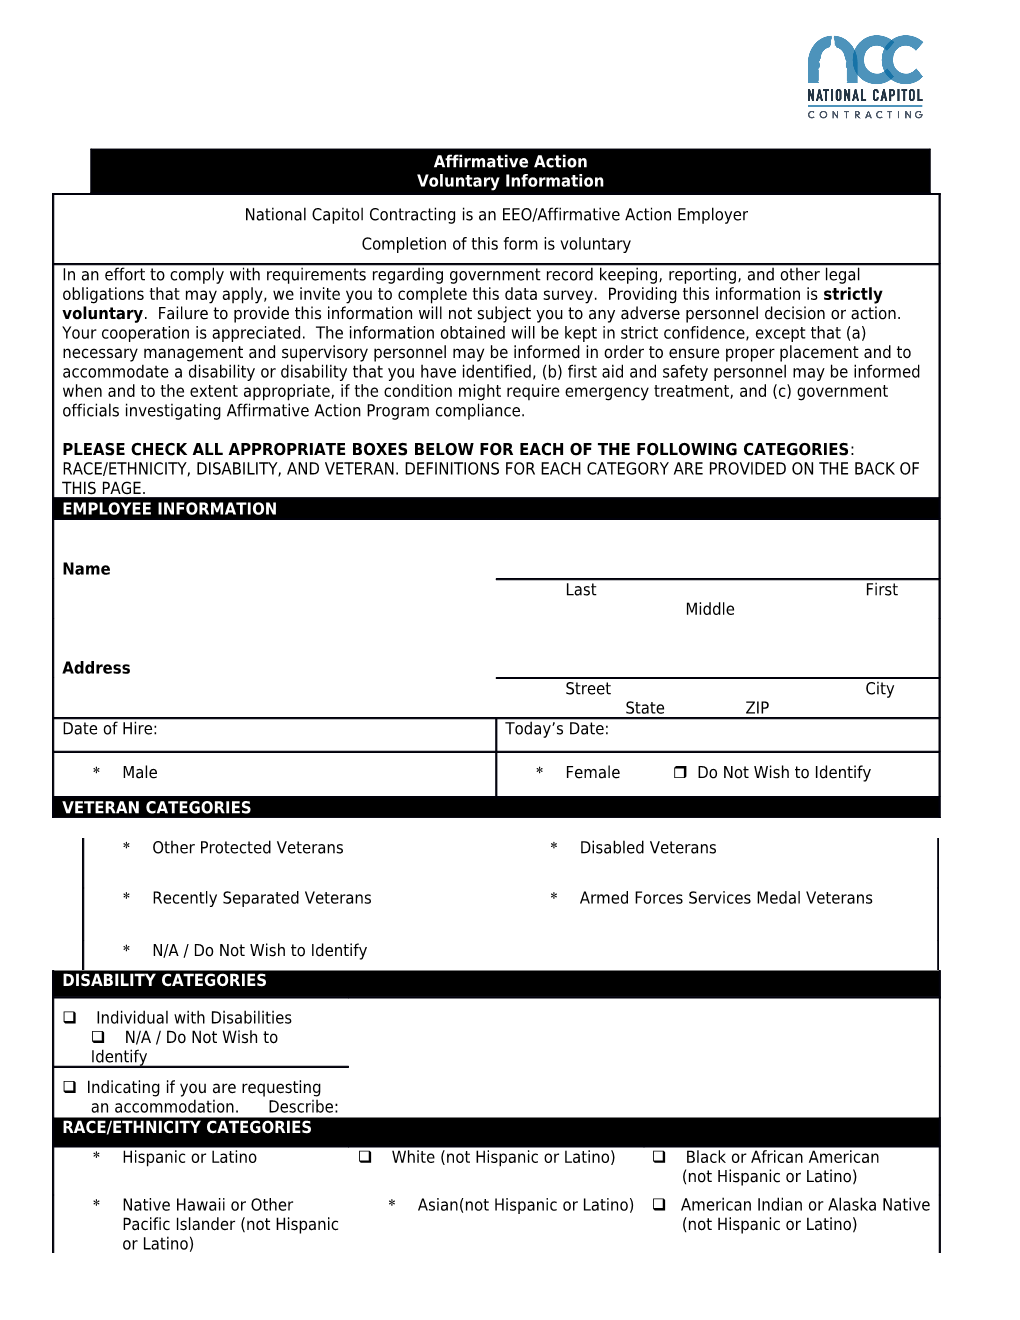 Employee Voluntary AAP Data Form